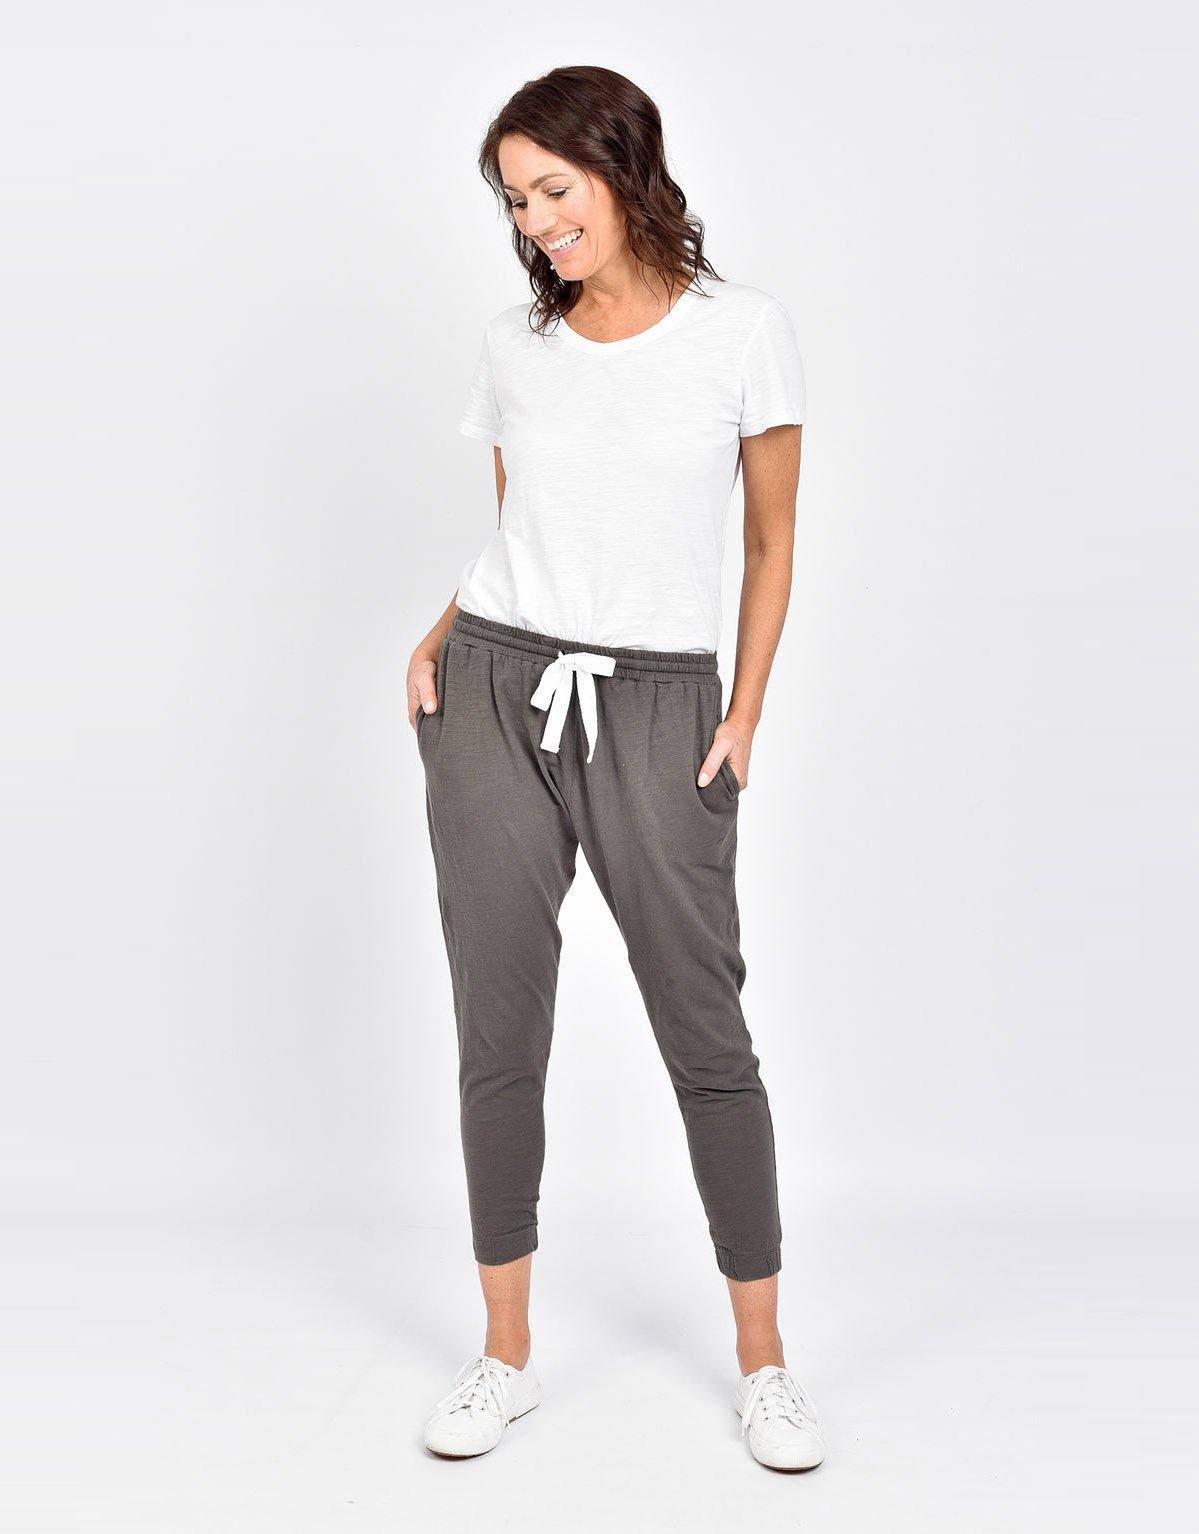 Bottoms | Women's Pants, Jeans & Skirts | White & Co. - White & Co